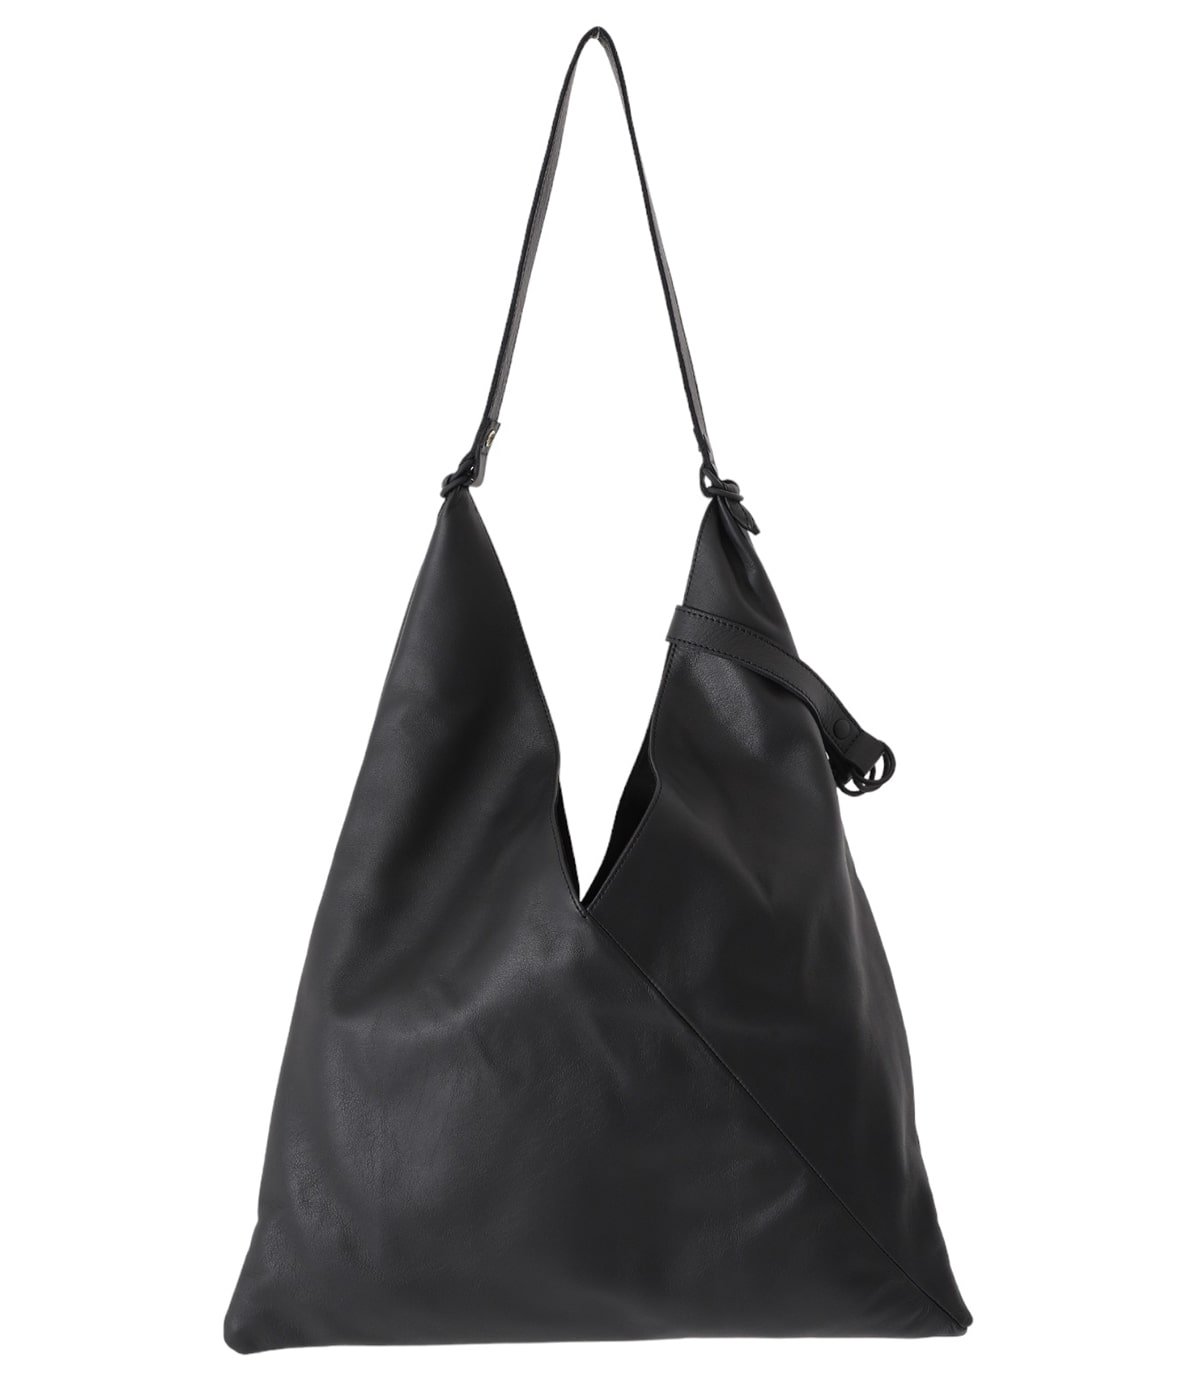 SLOW NEW SAUVAGE ブラック 2way tote bag - トートバッグ